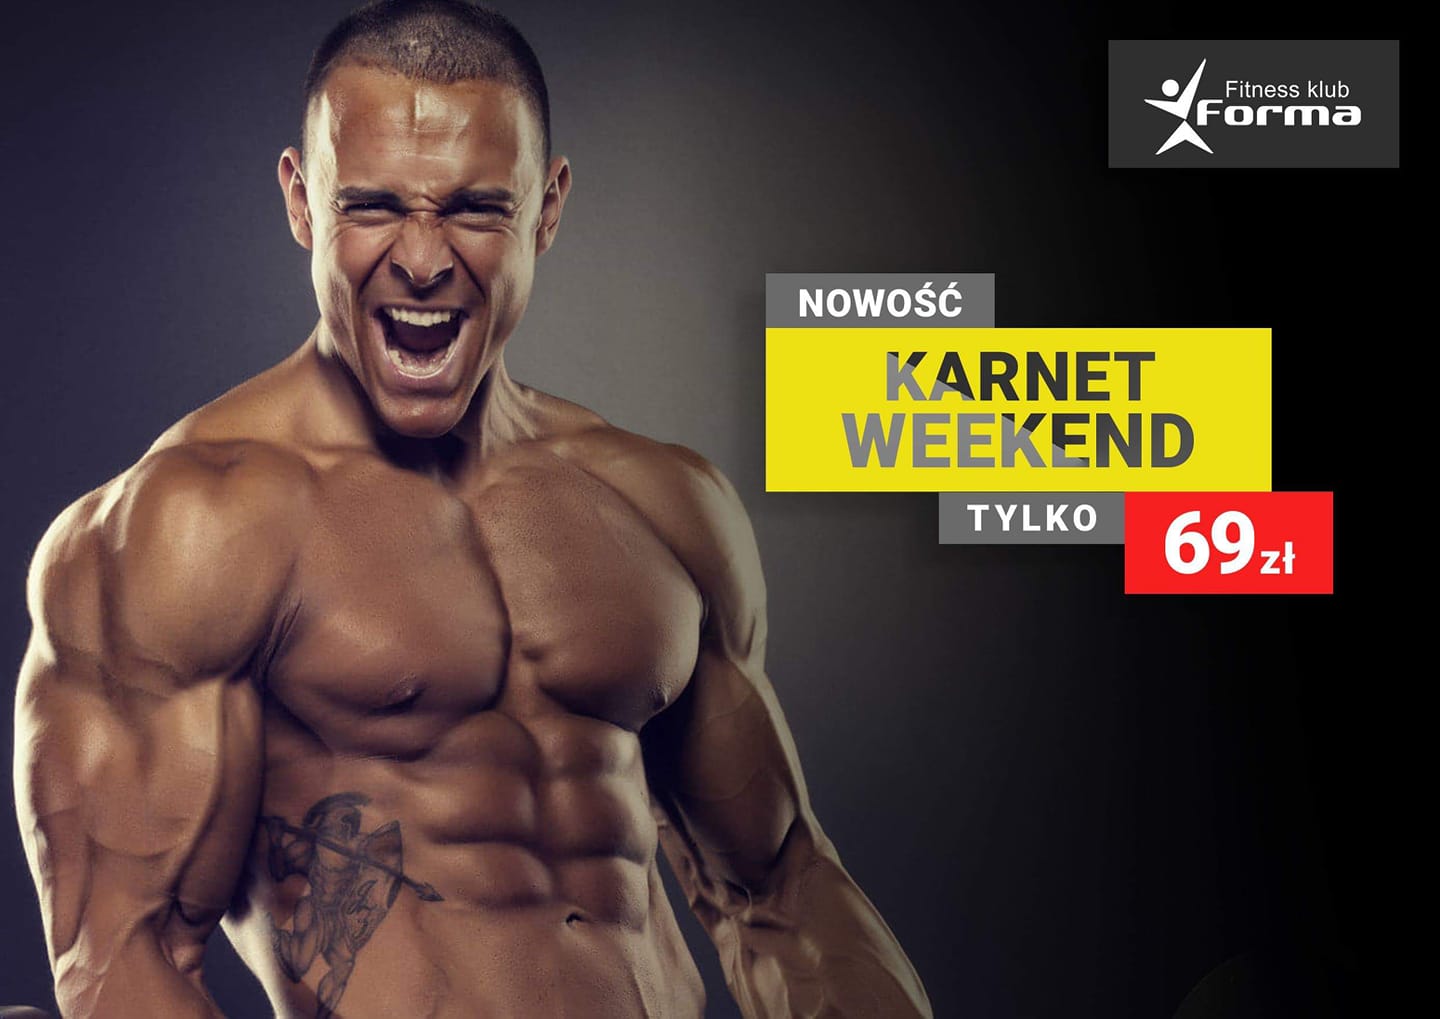 NOWOŚĆ – Karnet weekend !!!